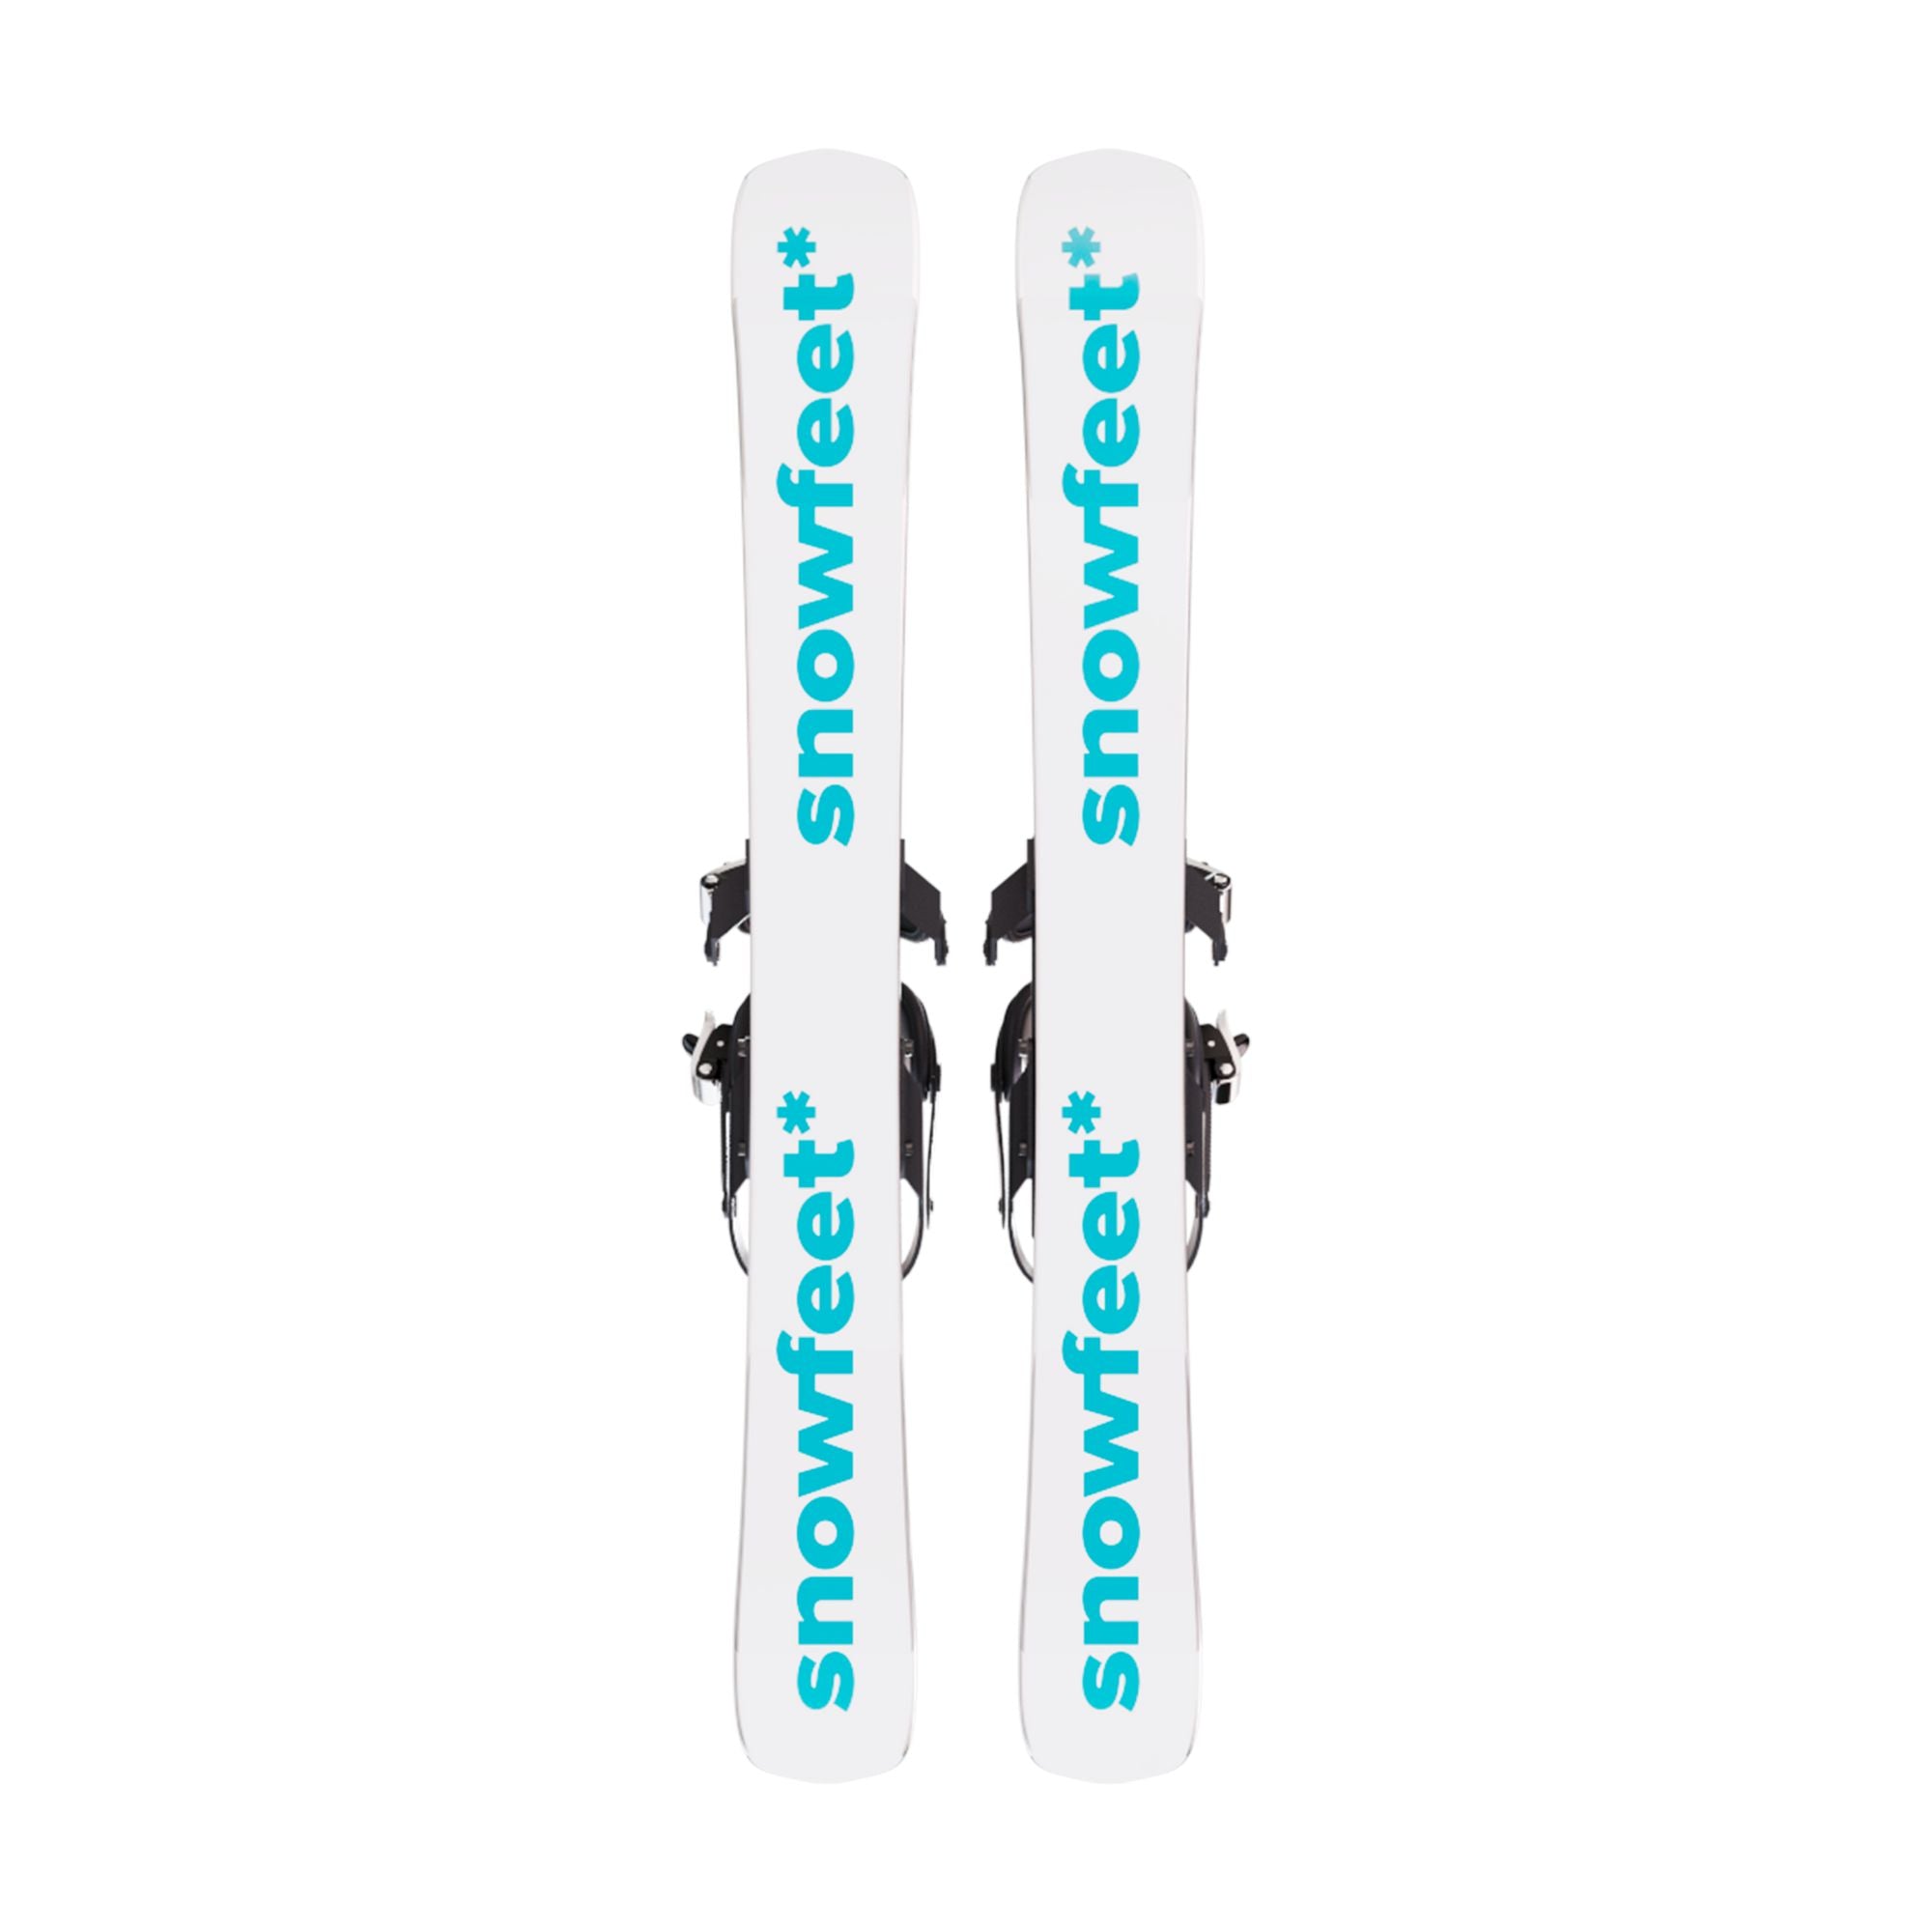 skiboards snowblades short ski 99 snowfeet mini little ski skiblades for snowboard boot with snowboard boot bindings blue turquoise